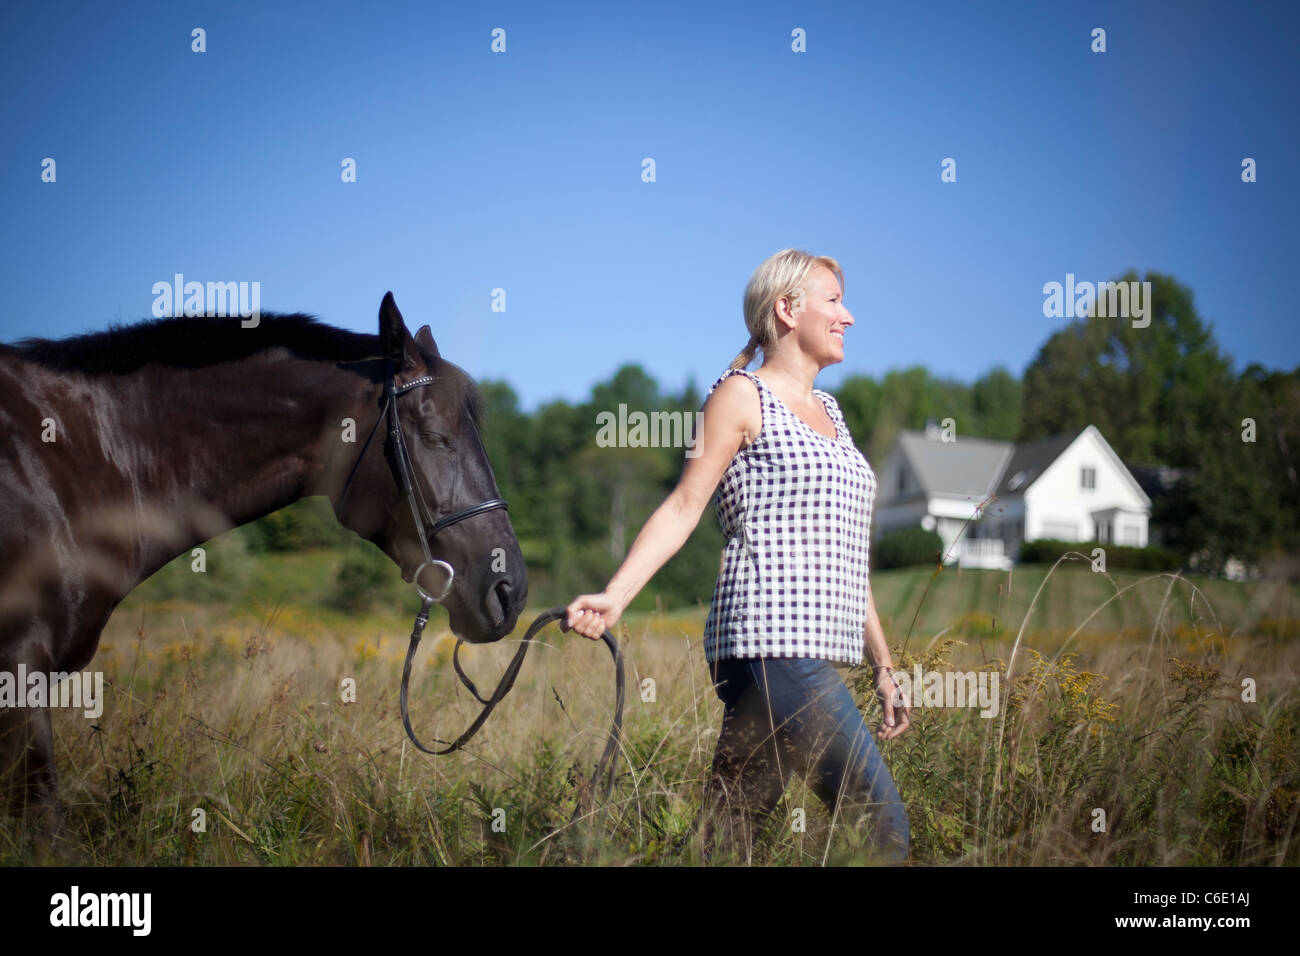 Caucasian woman leading horse through field Stock Photo